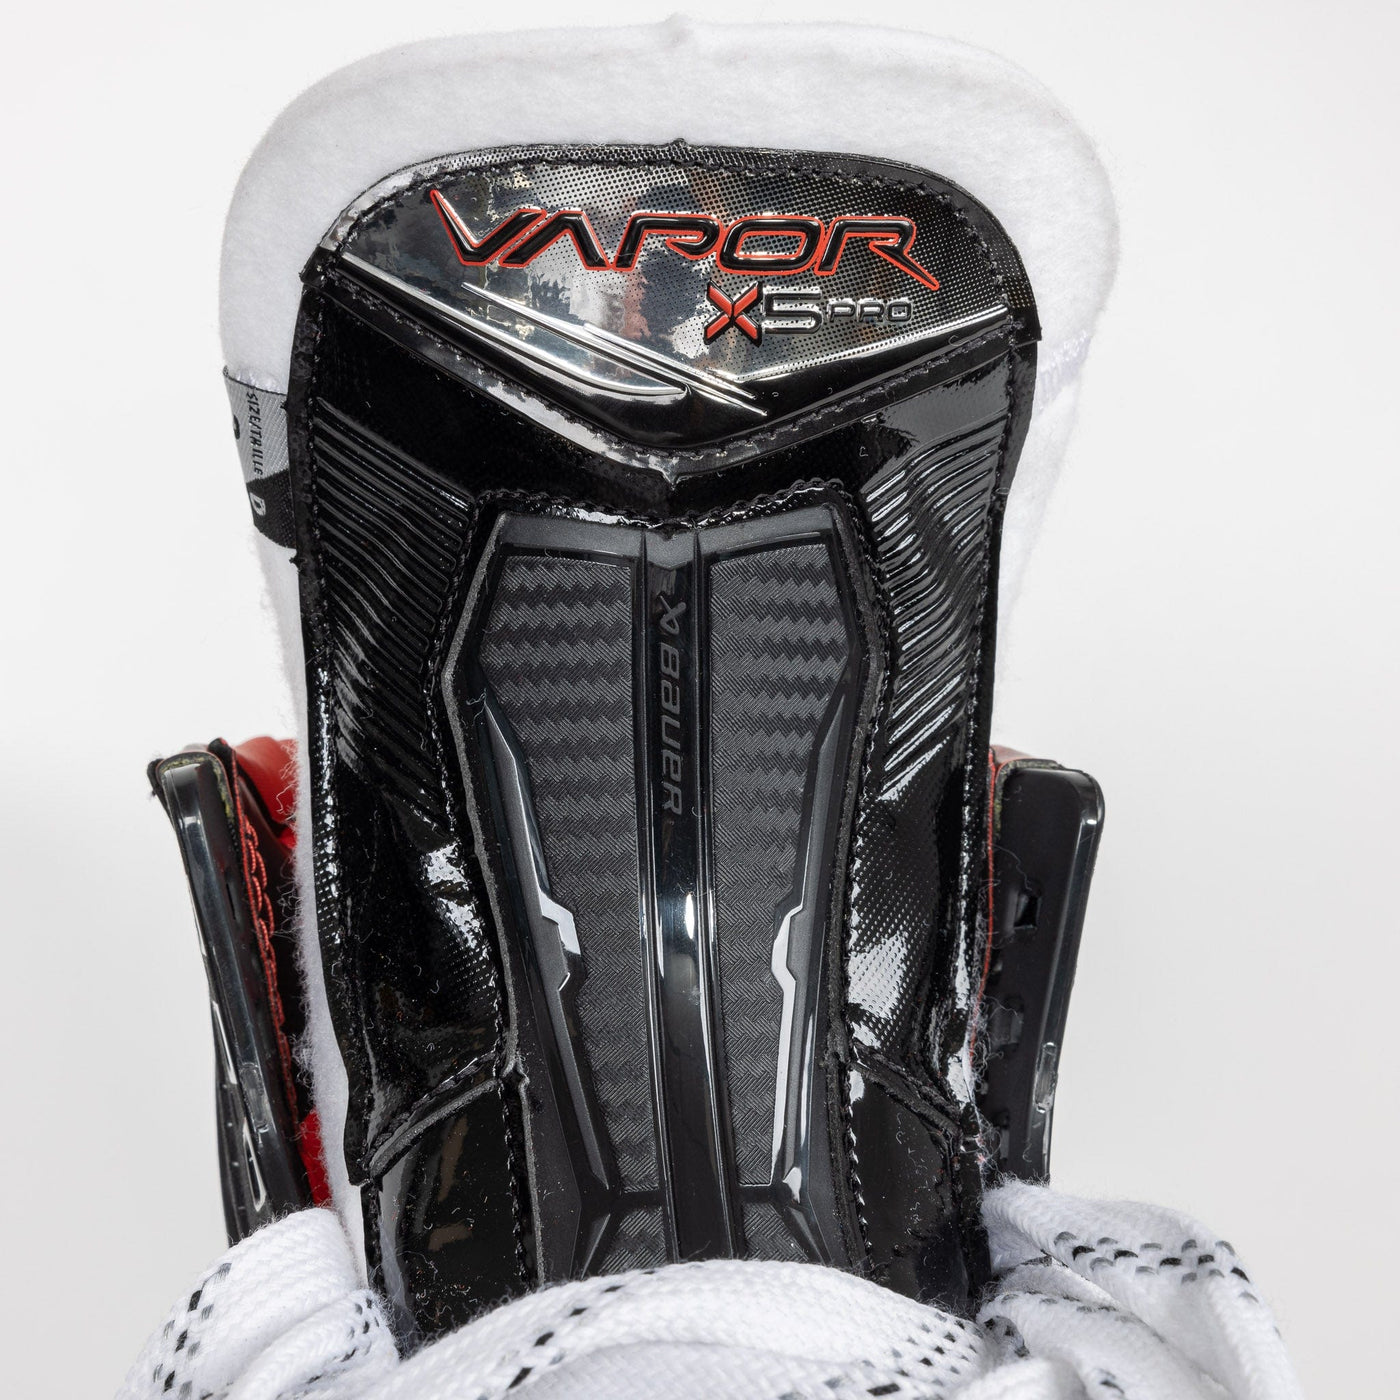 Bauer Vapor X5 Pro Junior Hockey Skates - The Hockey Shop Source For Sports